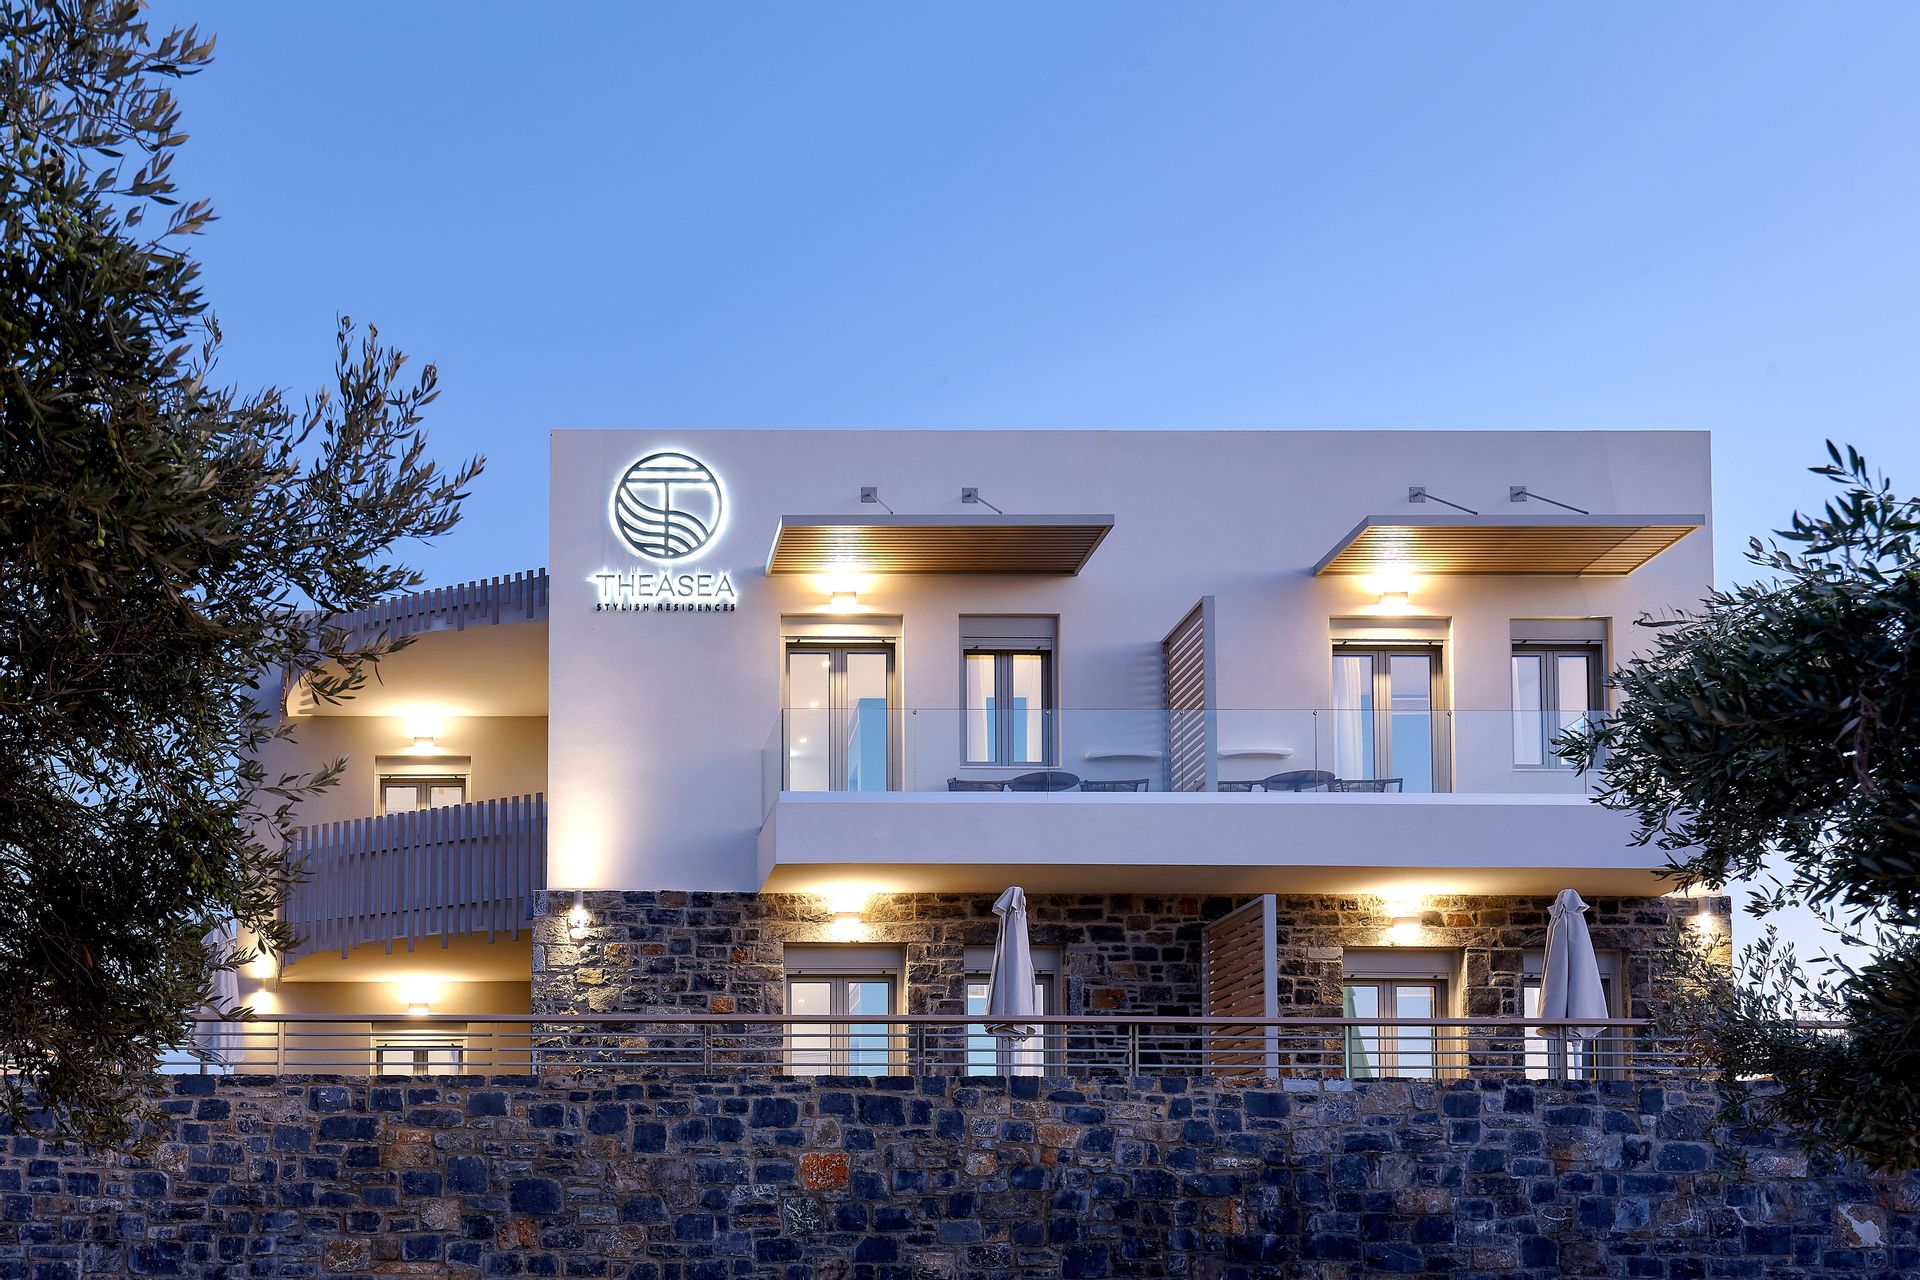 Theasea Stylish Residence - Ρέθυμνο, Κρήτη ✦ 2 Ημέρες (1 Διανυκτέρευση) ✦ 2 άτομα ✦ 1 ✦ έως 30/09/2022 ✦ Υπέροχη τοποθεσία!